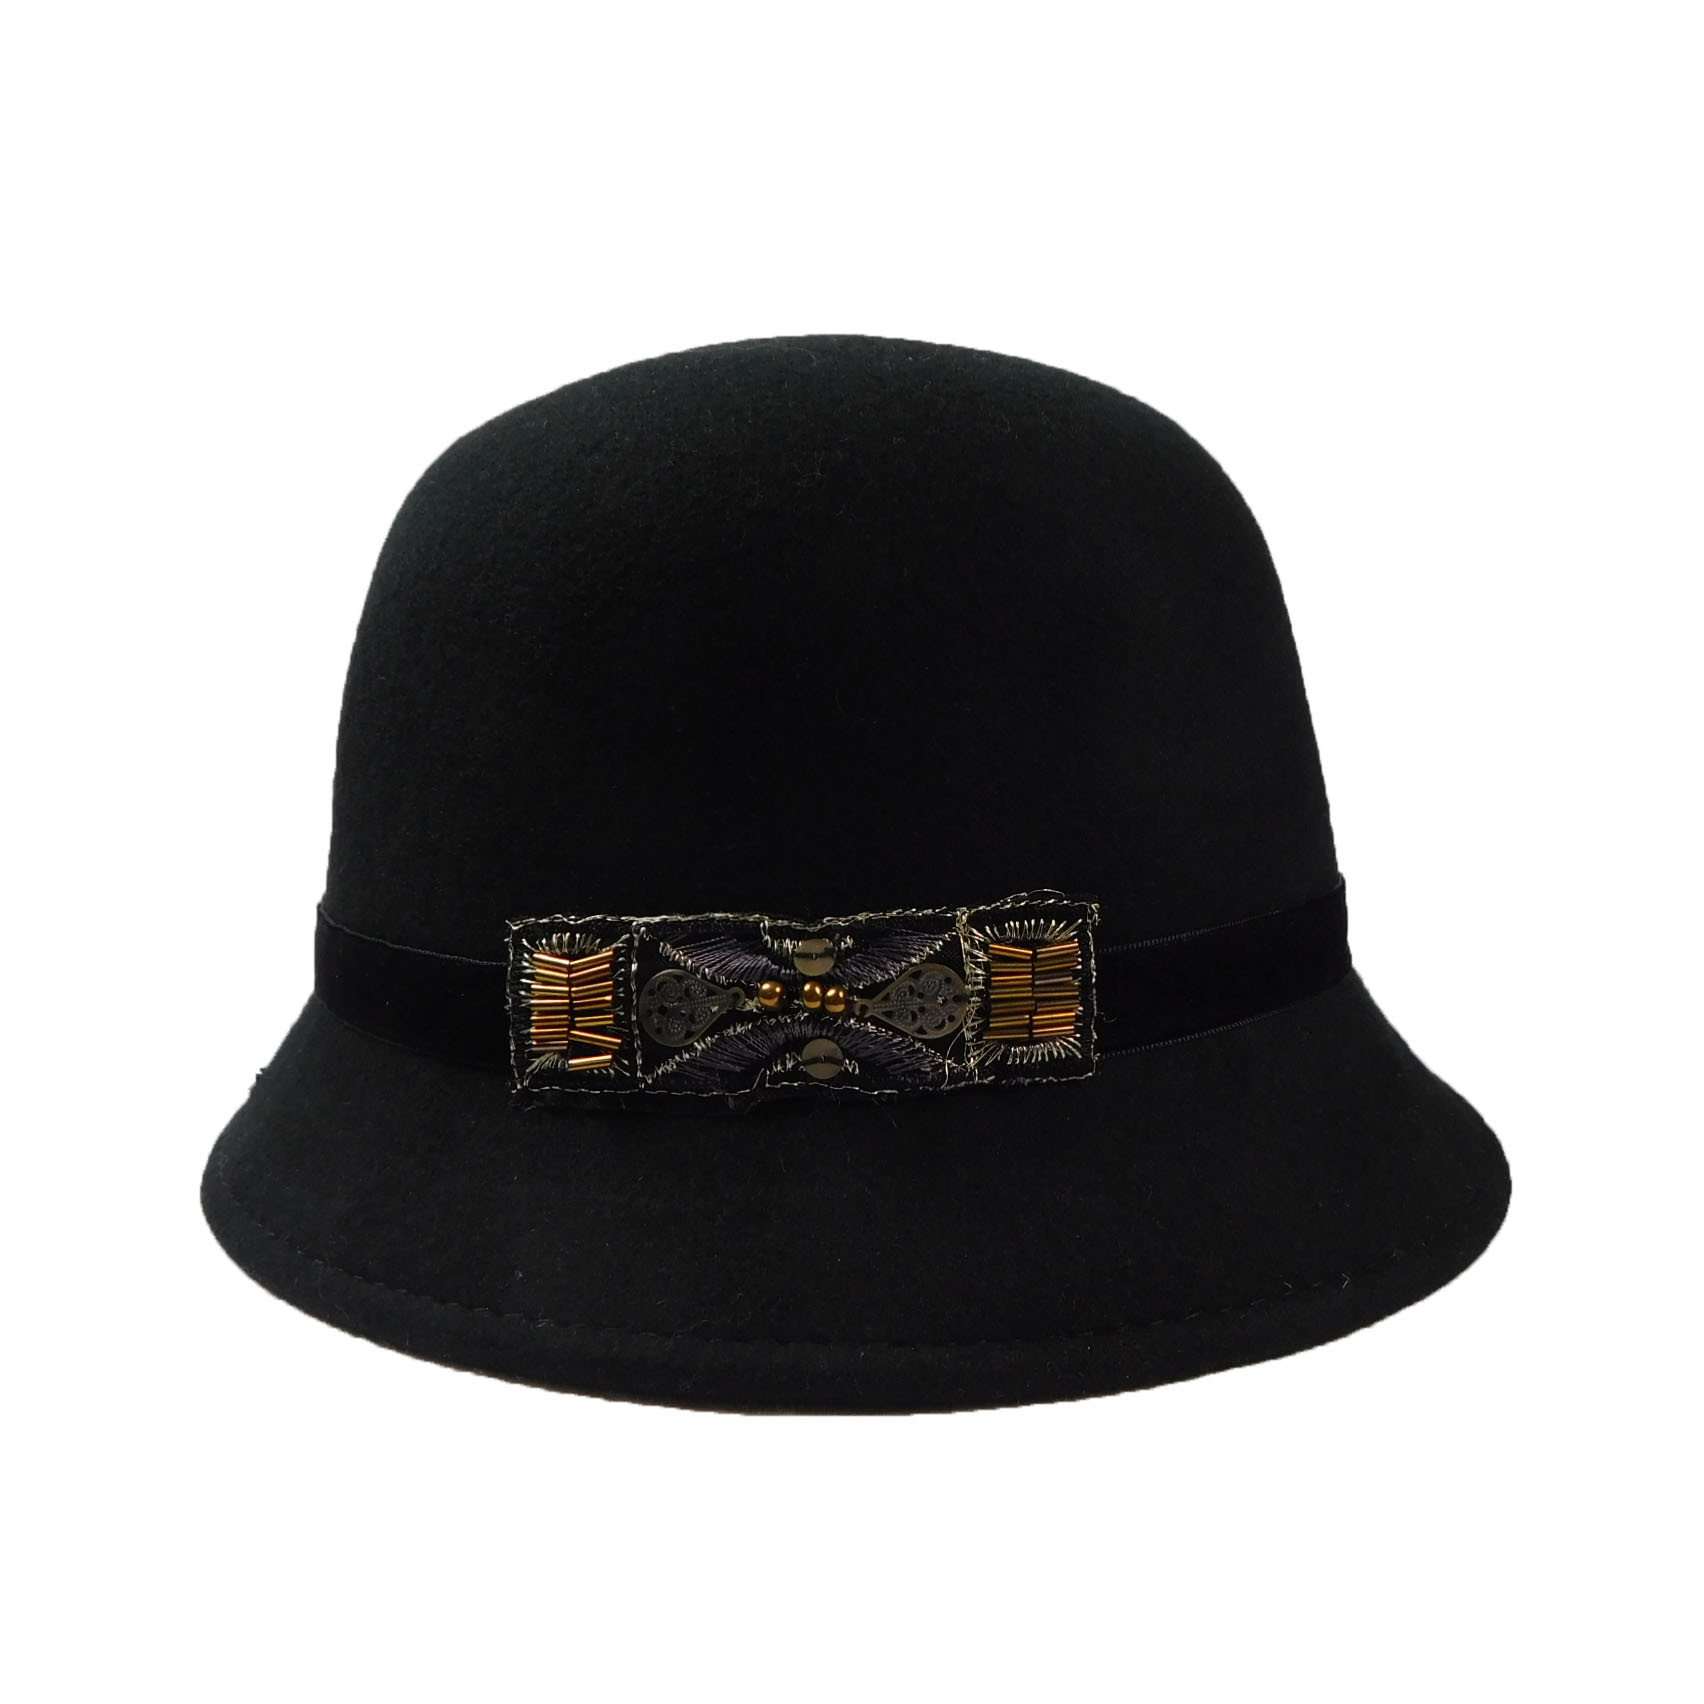 Wool Felt Cloche with Velvet Beaded Applique - Scala Collezione Cloche Scala Hats WWWF151BK Black Medium (57 cm) 